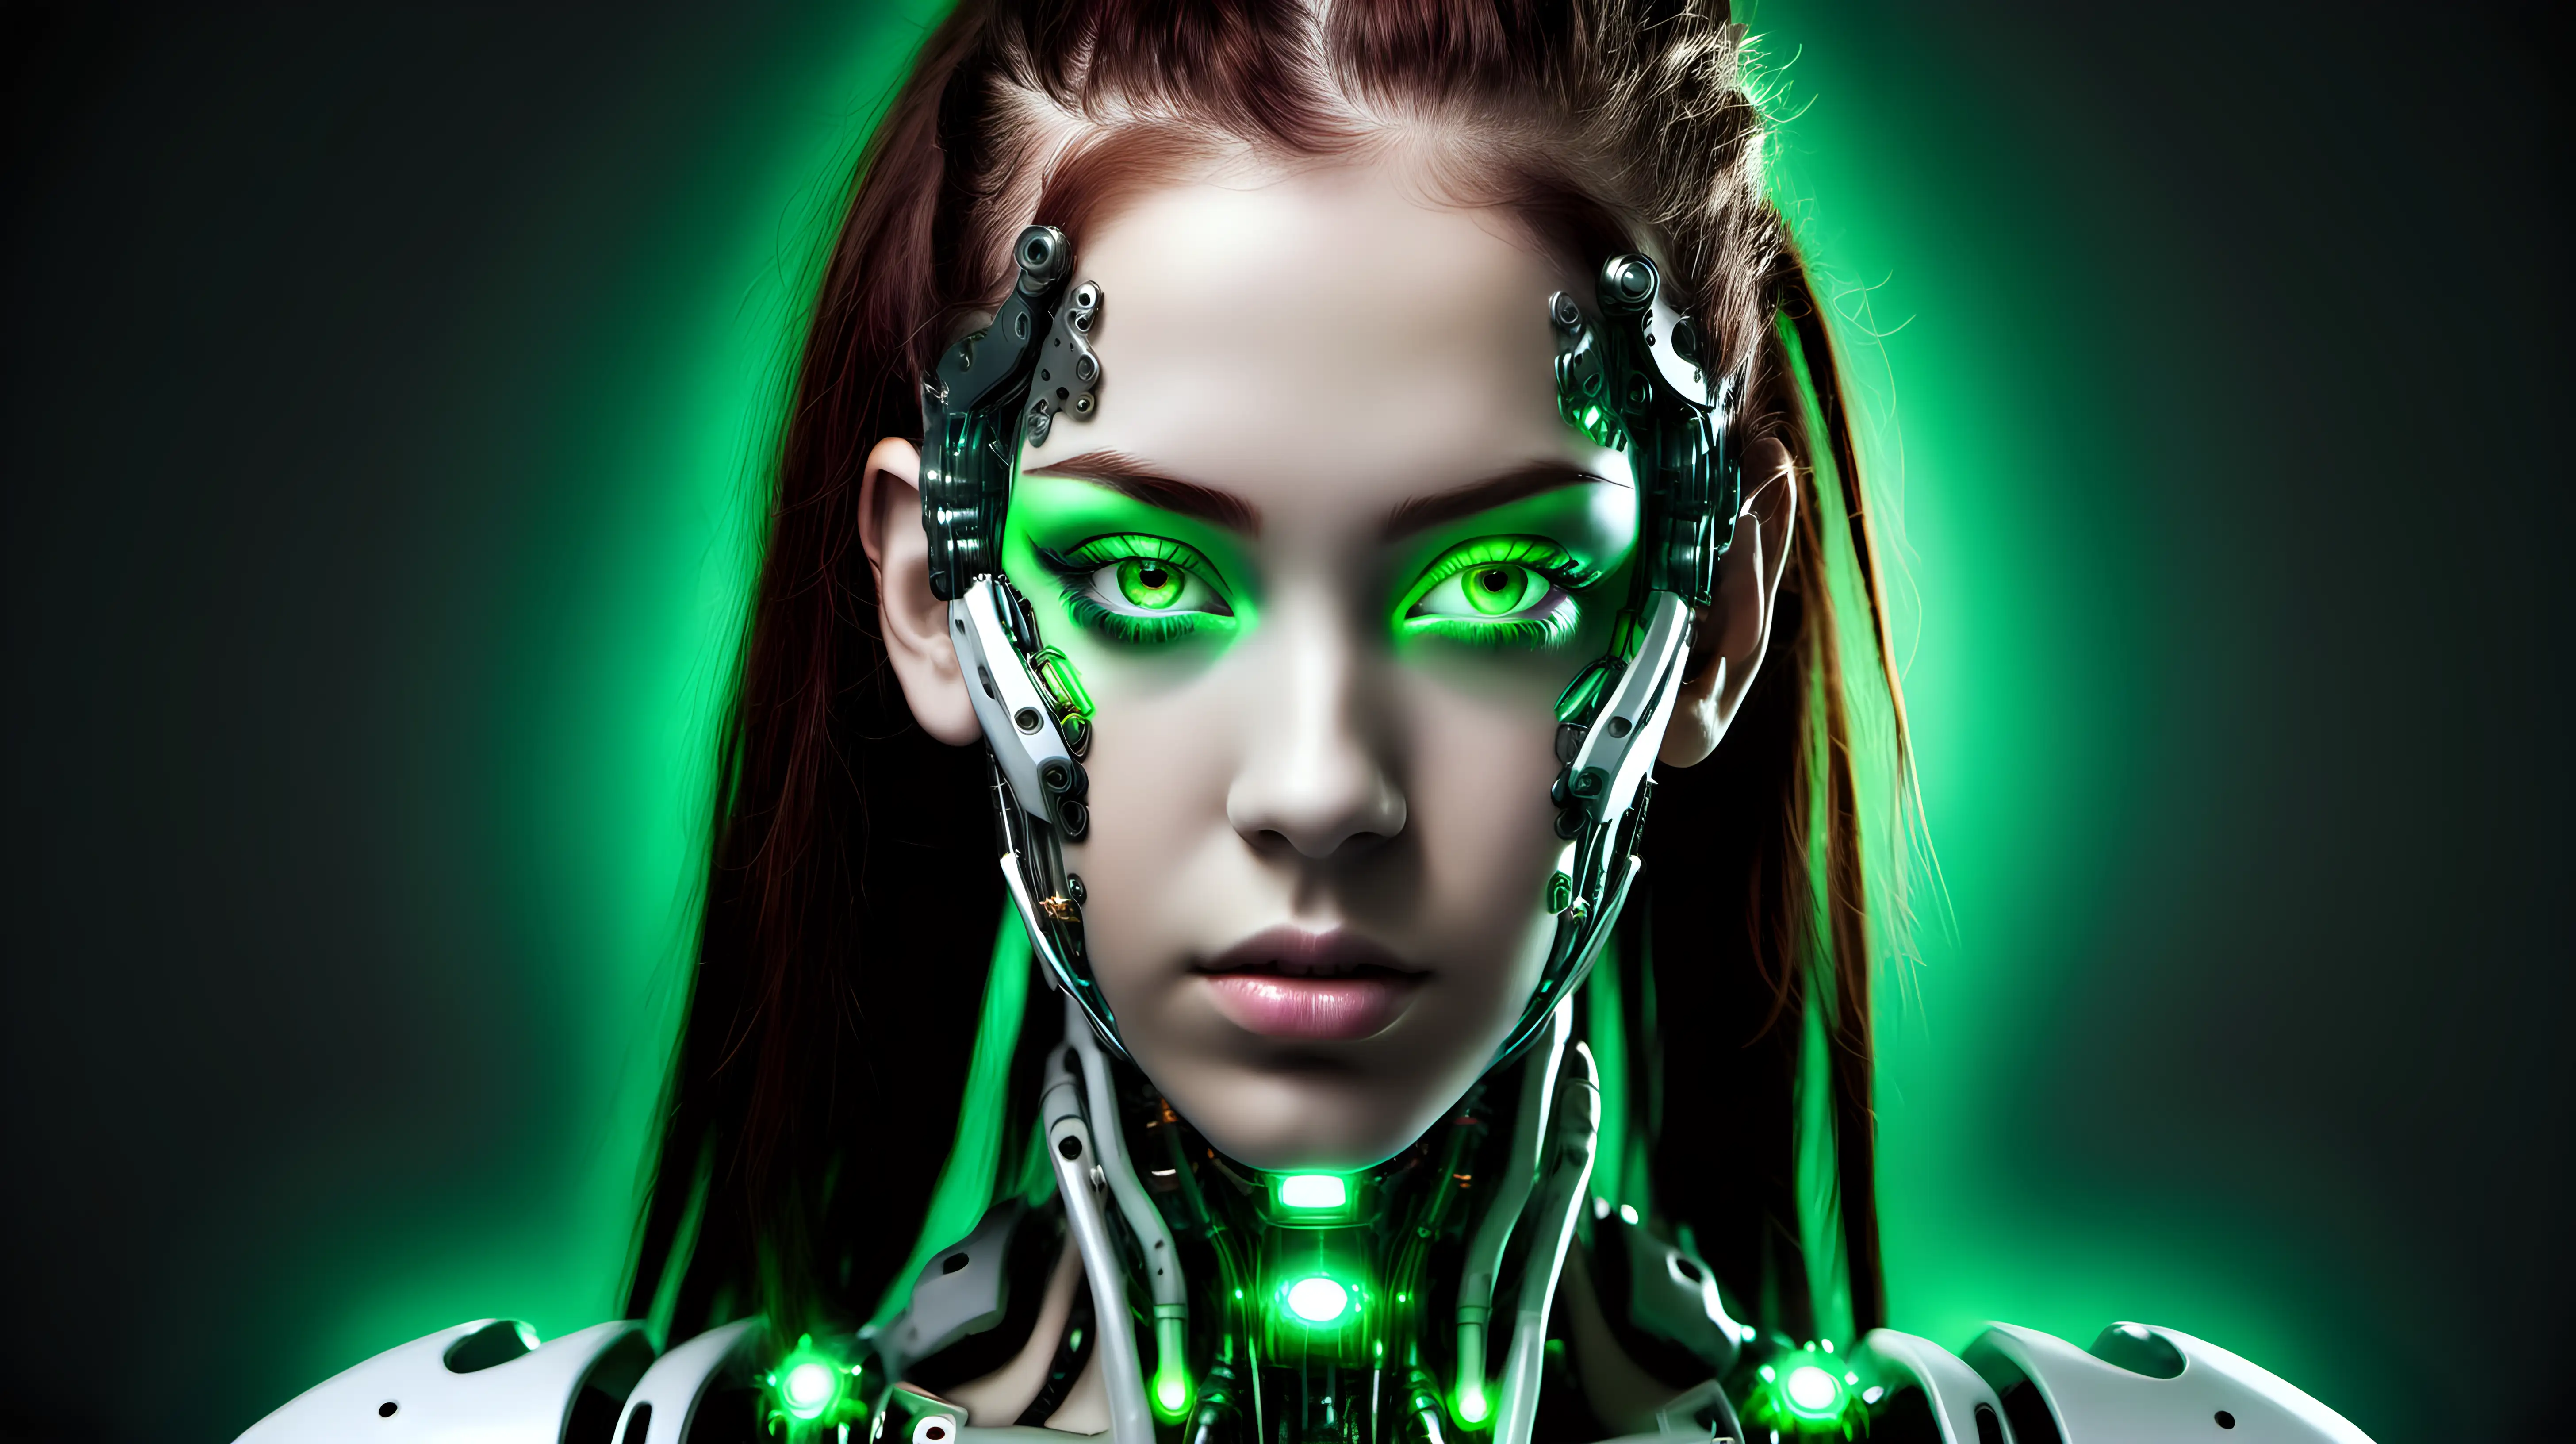 Beautiful 18YearOld Cyborg Woman with Natural Green Eyes